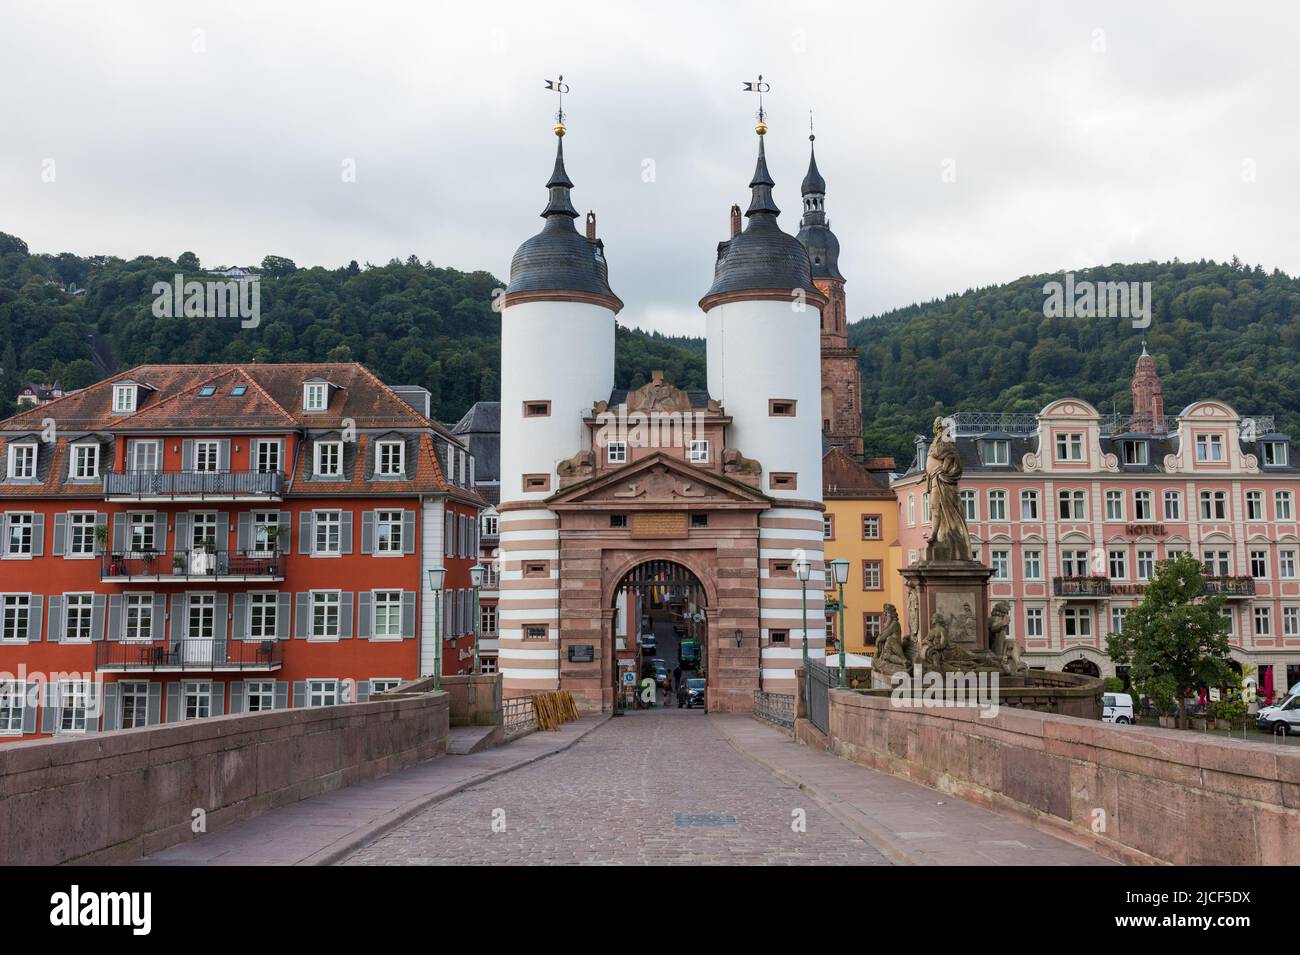 Heidelberg, Germania - ago 27, 2021: Vista sul cancello (Brückentor) del vecchio ponte ('Alte Brücke') di Heidelberg. Nessuna gente. Foto Stock